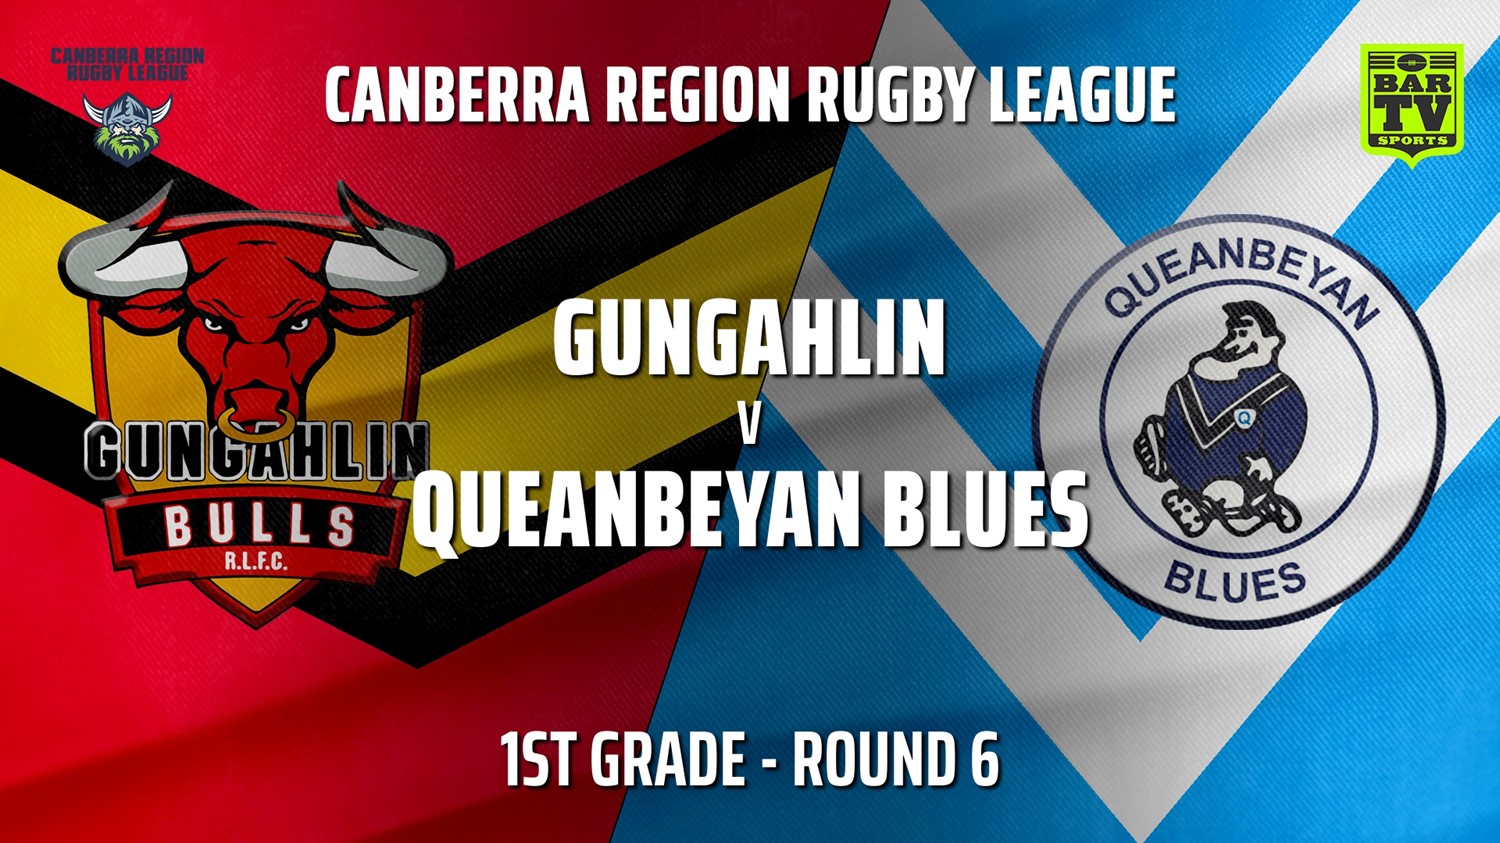 210522-CRRL Round 6 - 1st Grade - Gungahlin Bulls v Queanbeyan Blues Minigame Slate Image